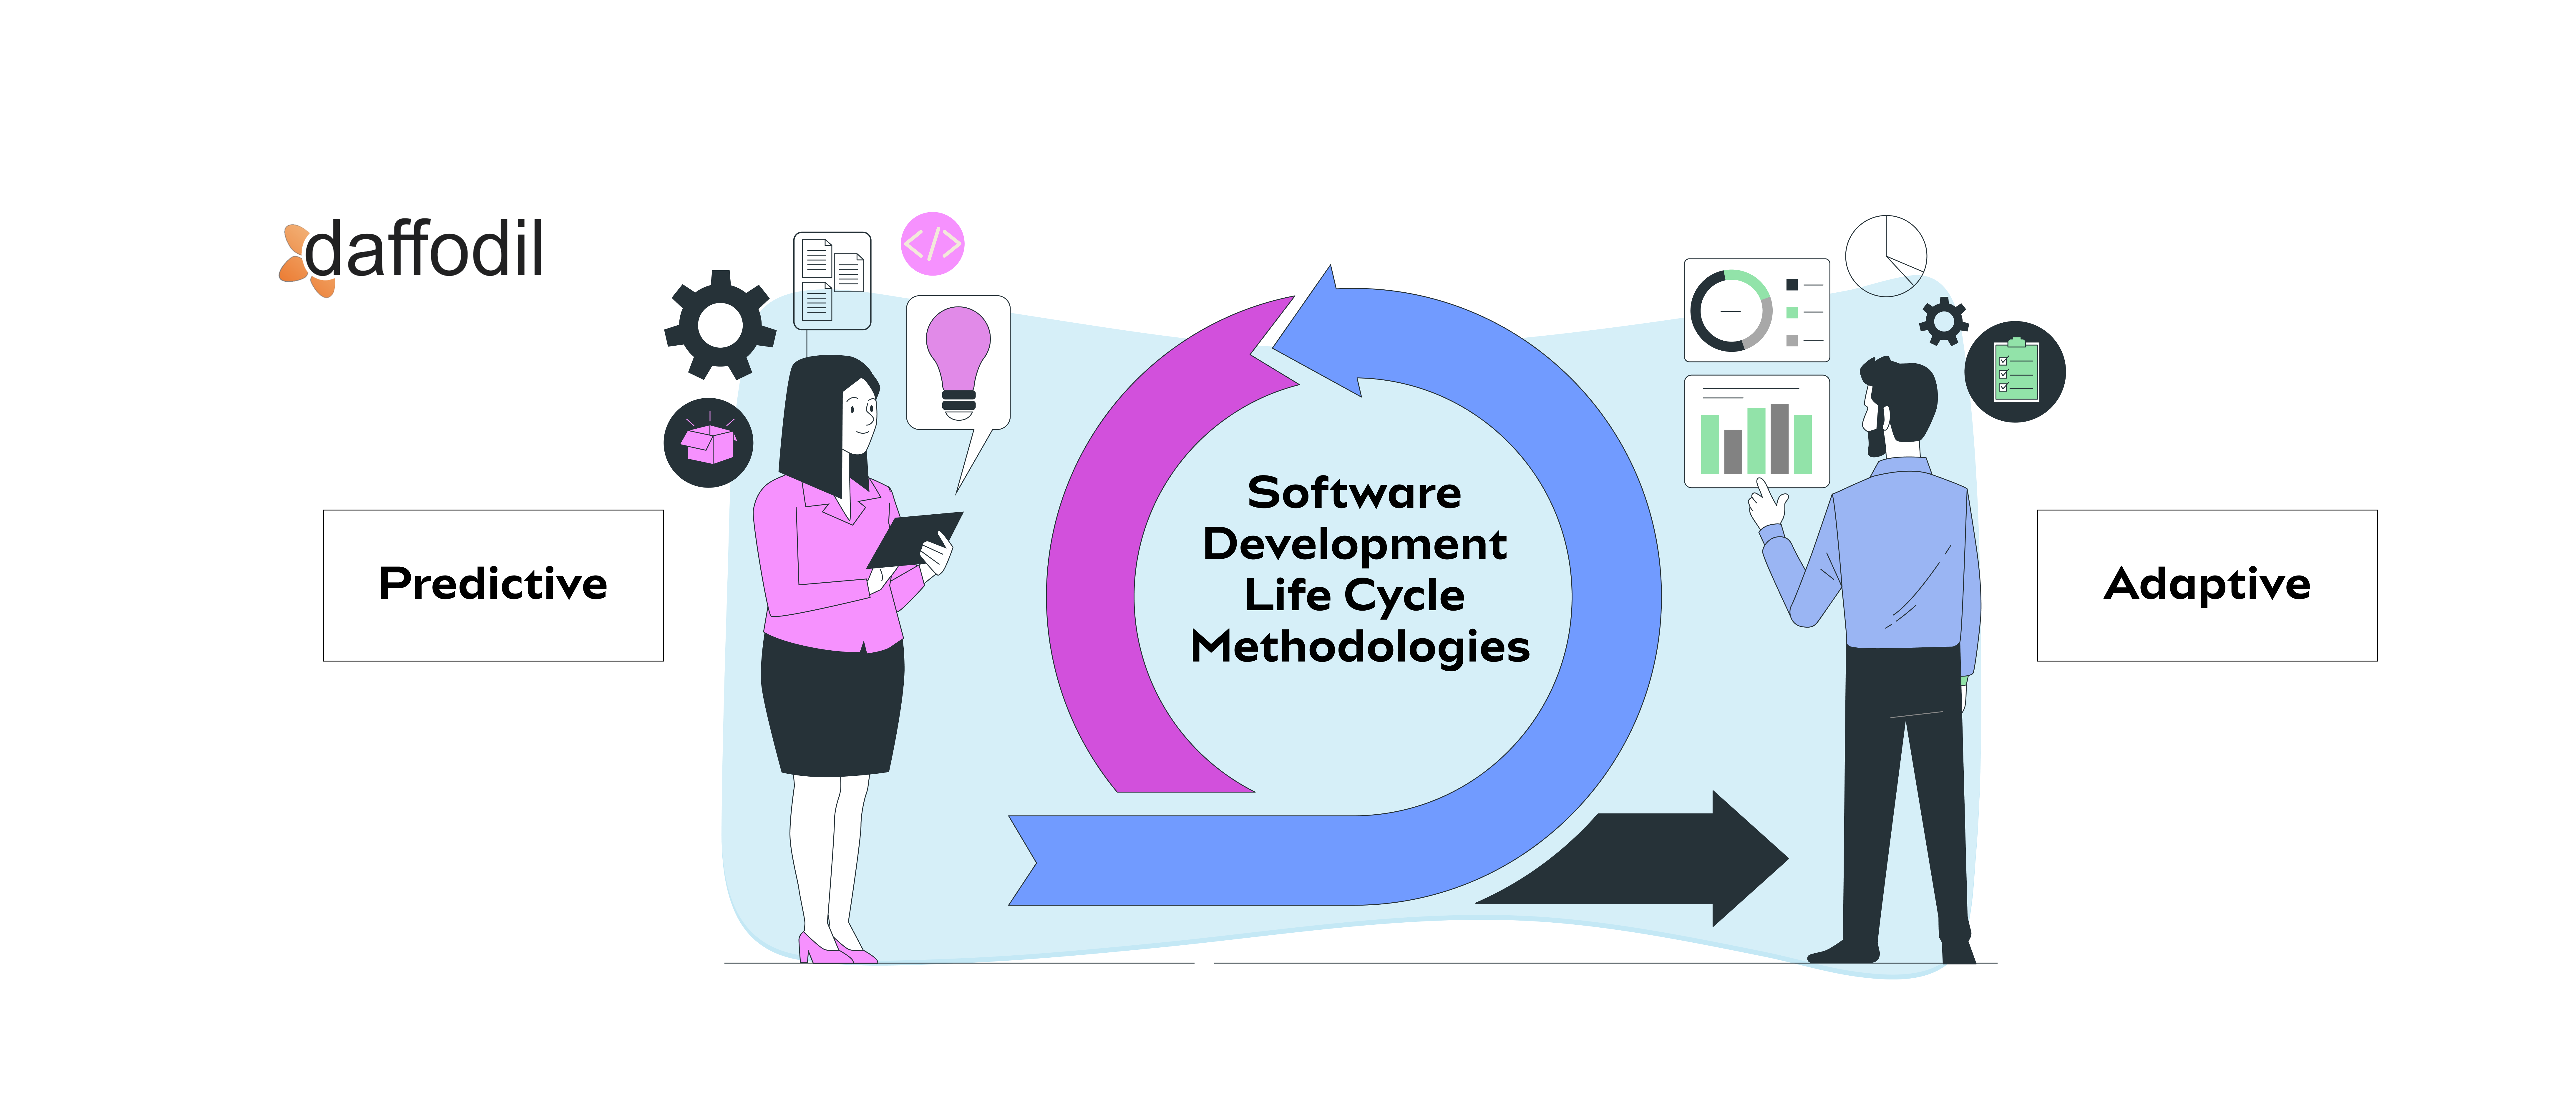 Predictive vs Adaptive Software Development Life Cycle Methodologies